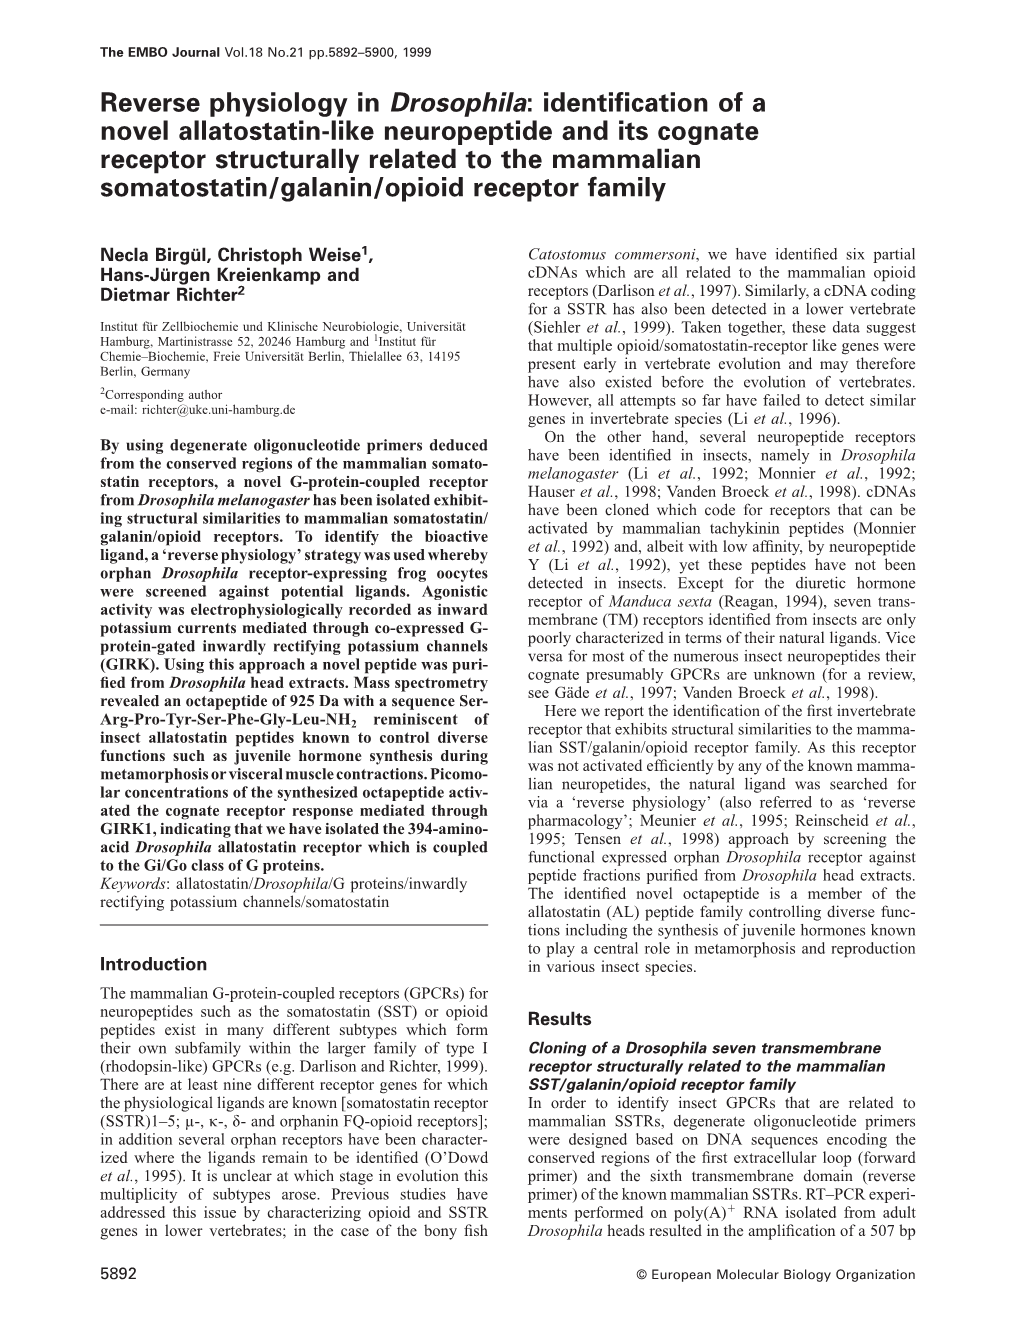 Reverse Physiology in Drosophila: Identification of a Novel Allatostatin